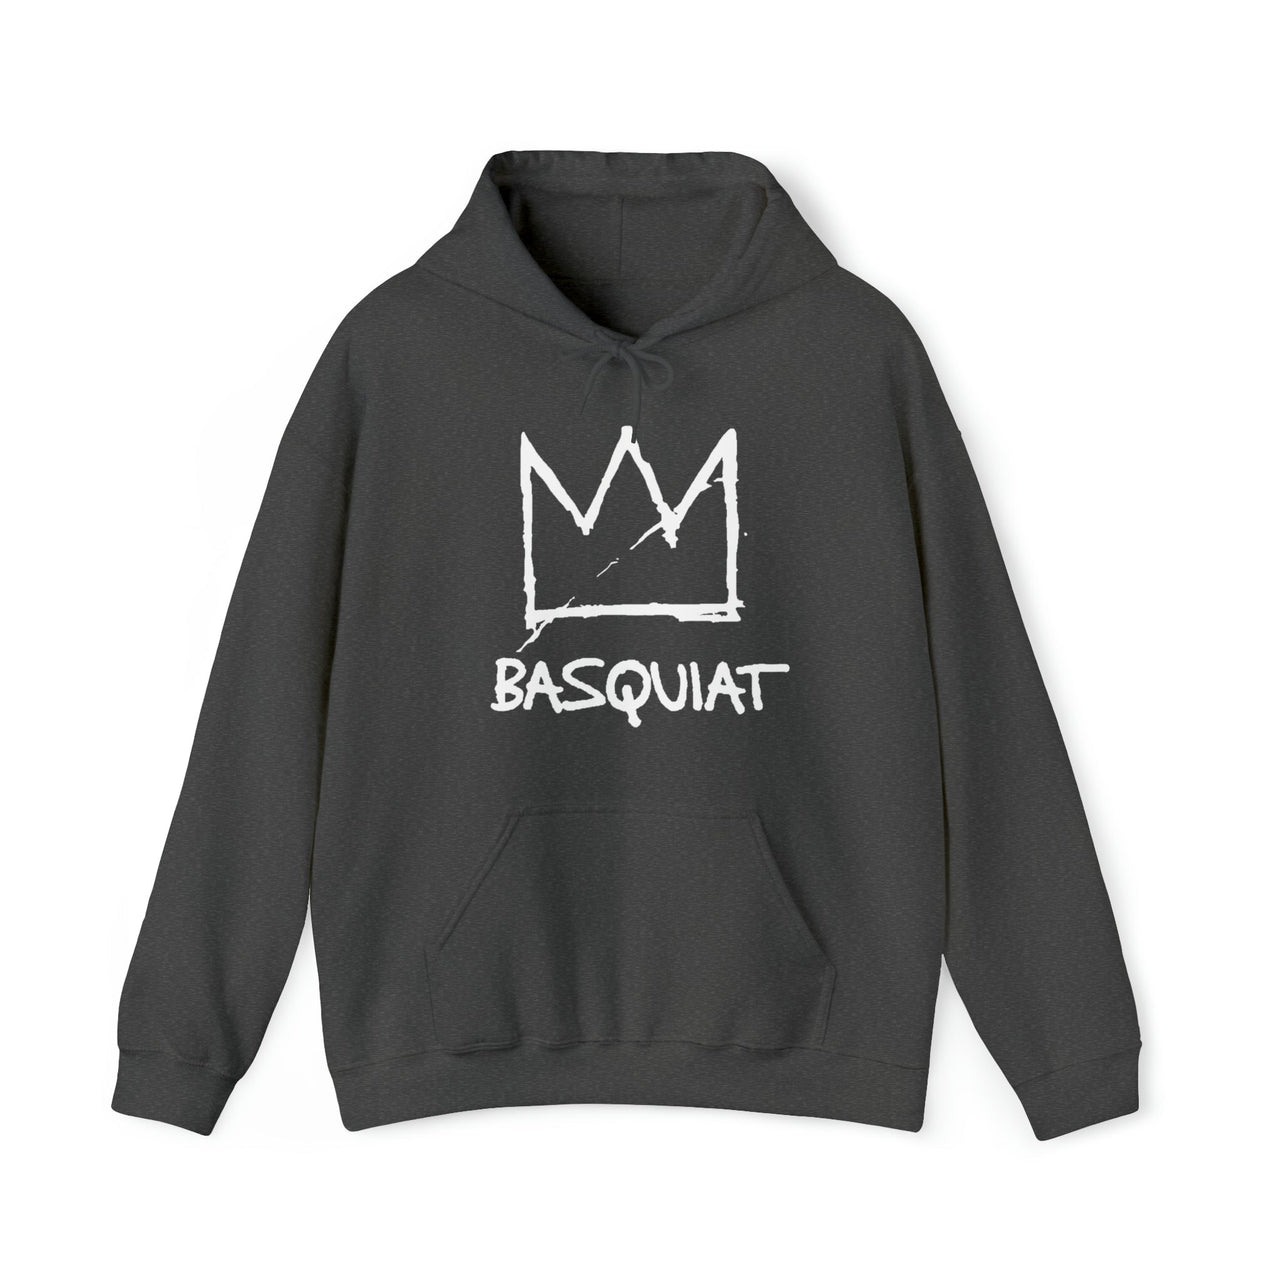 Basquiat Name with Crown Hoodie - Clothing - Harvey Ltd